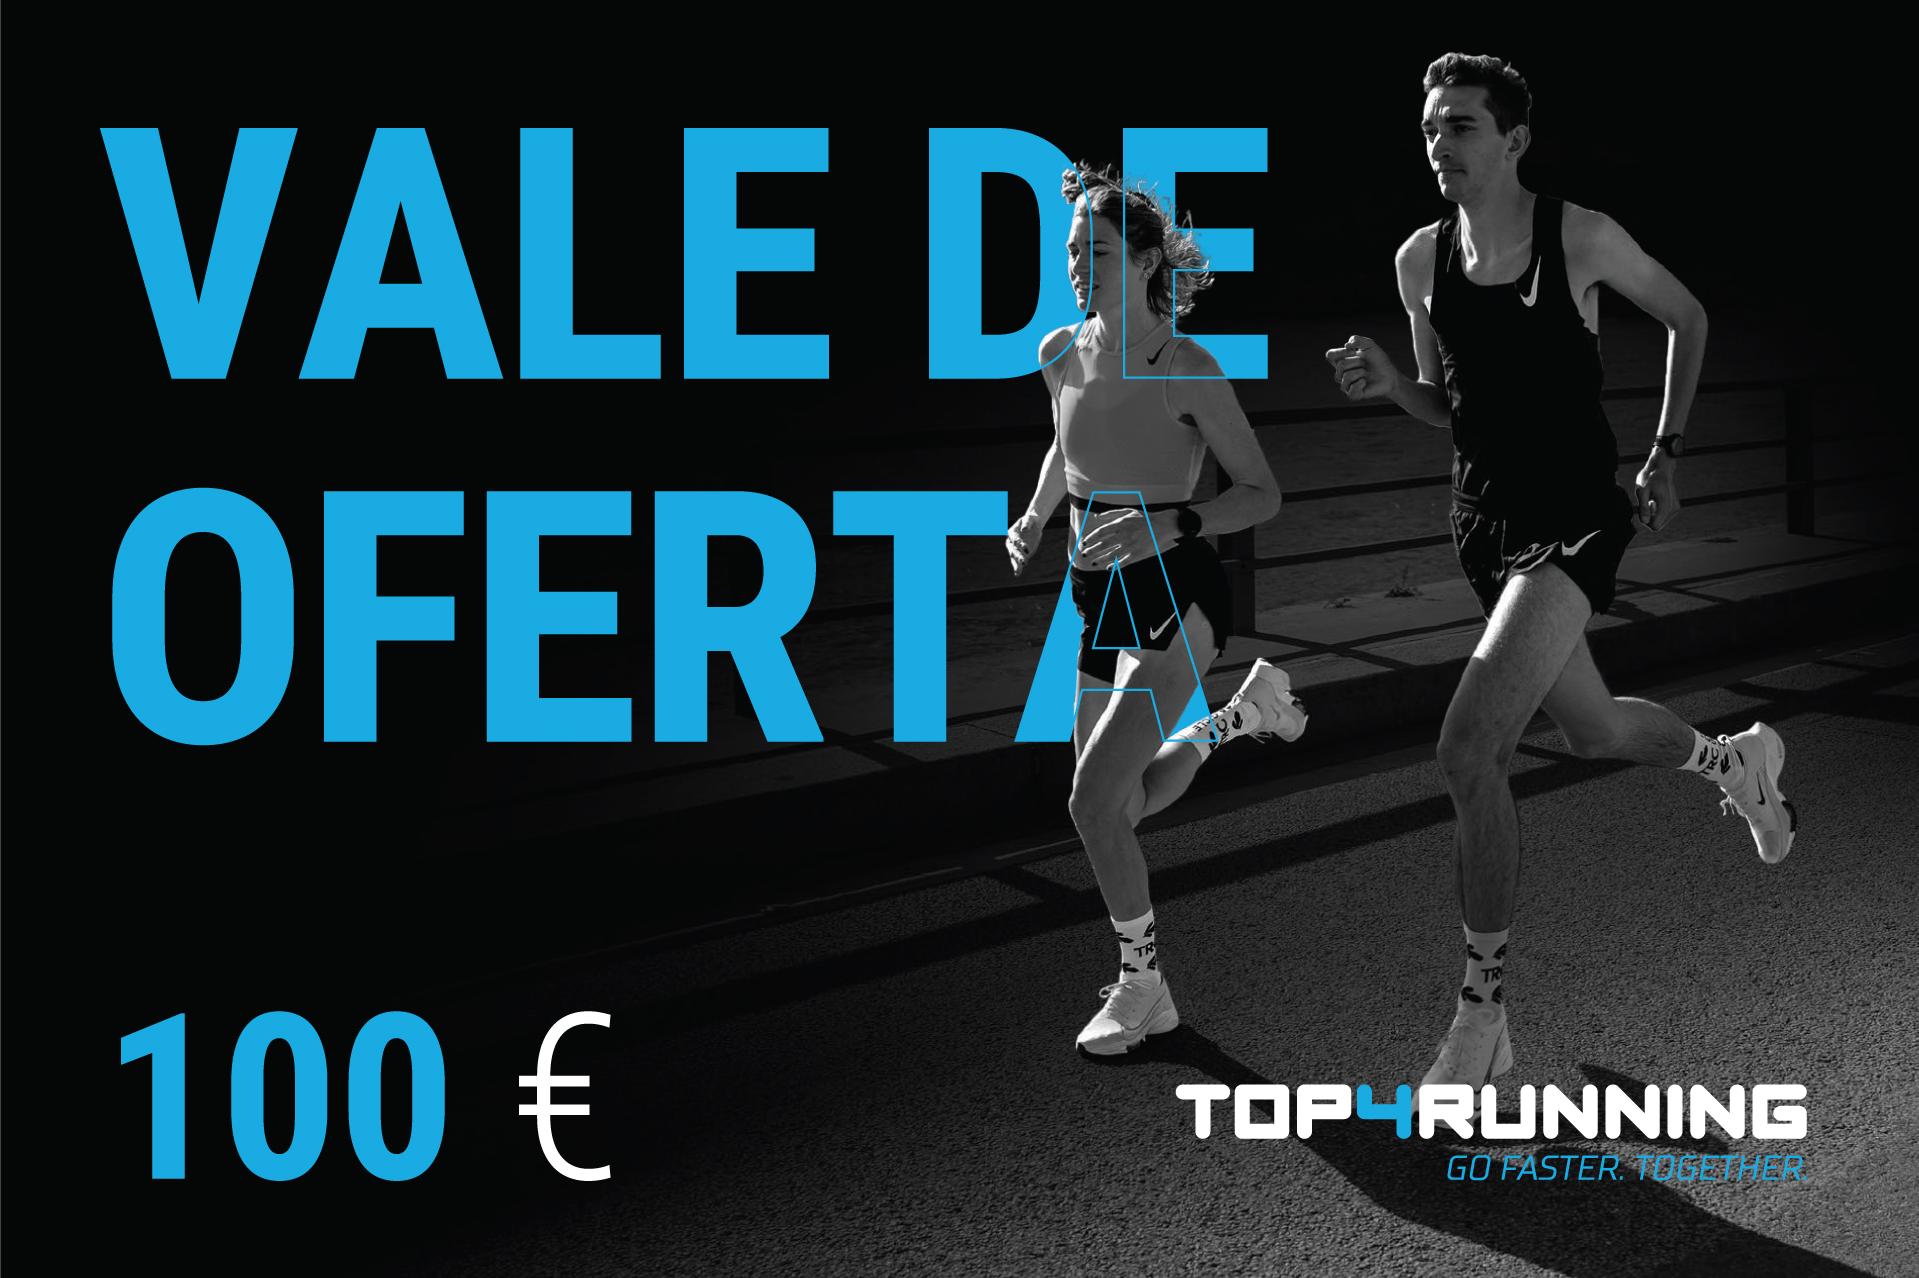 Top4running Vale de oferta no valor de 100€